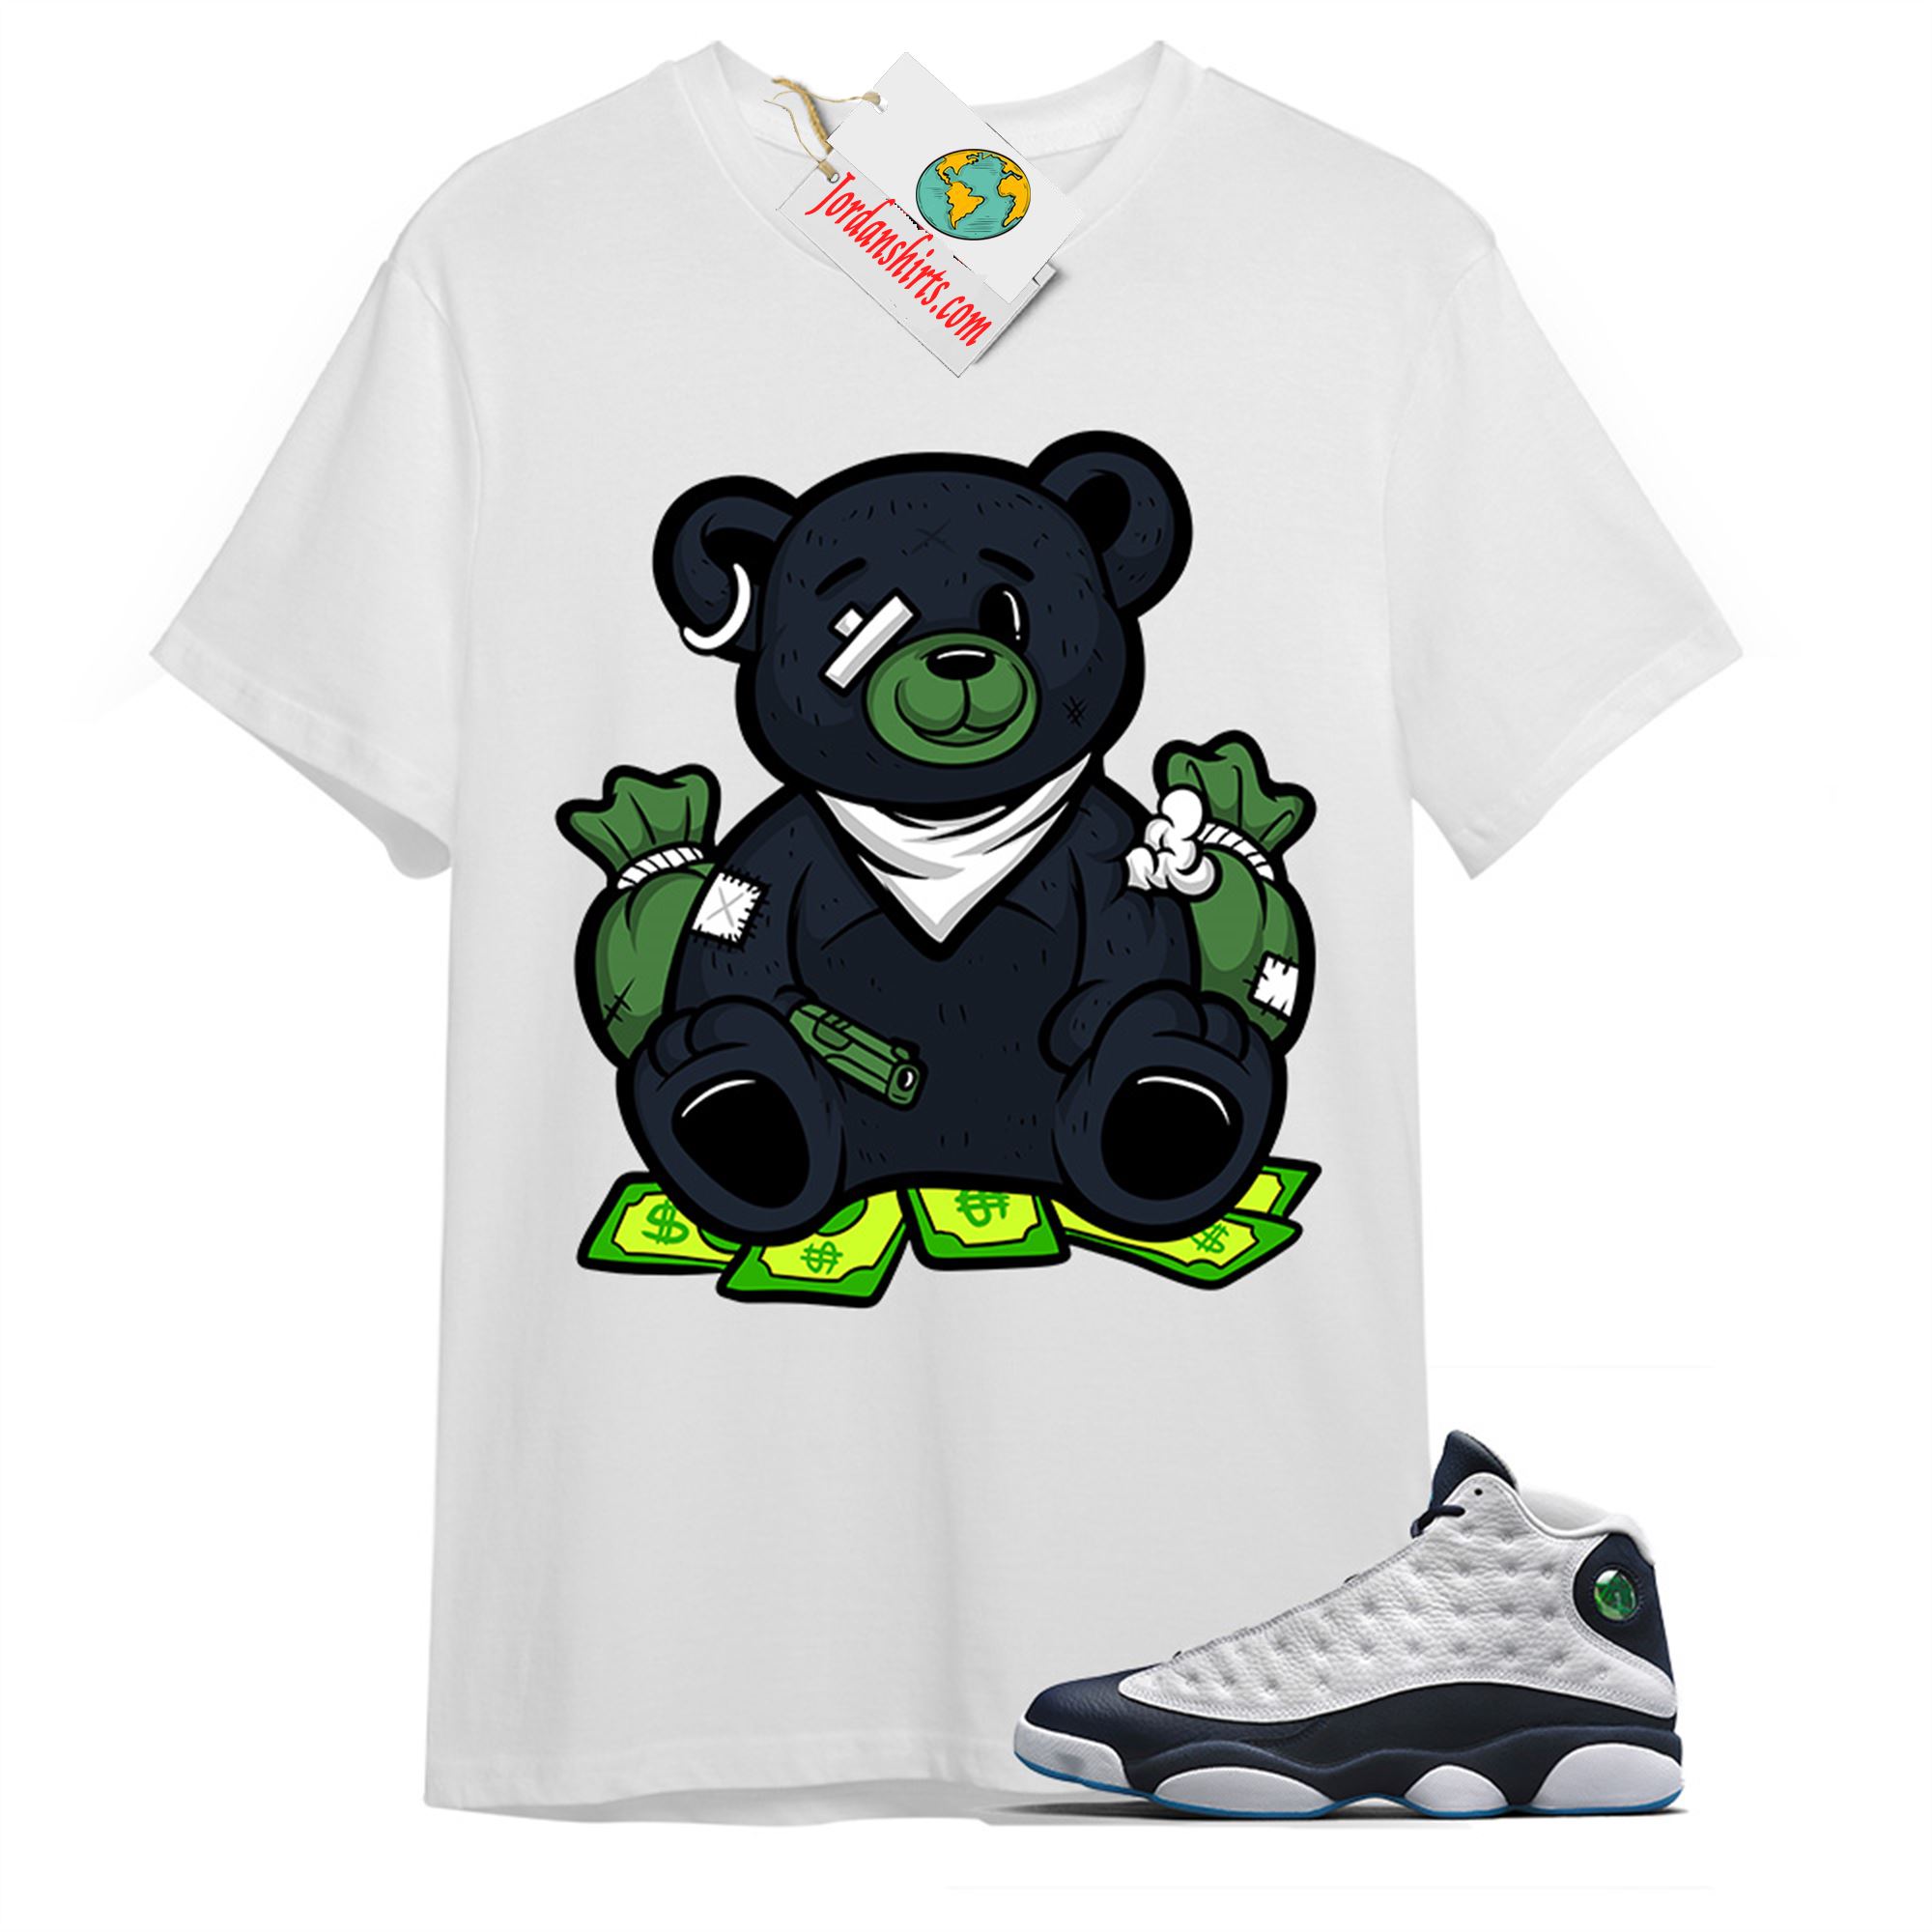 Jordan 13 Shirt, Rich Teddy Bear Gangster White T-shirt Air Jordan 13 Obsidian 13s Full Size Up To 5xl